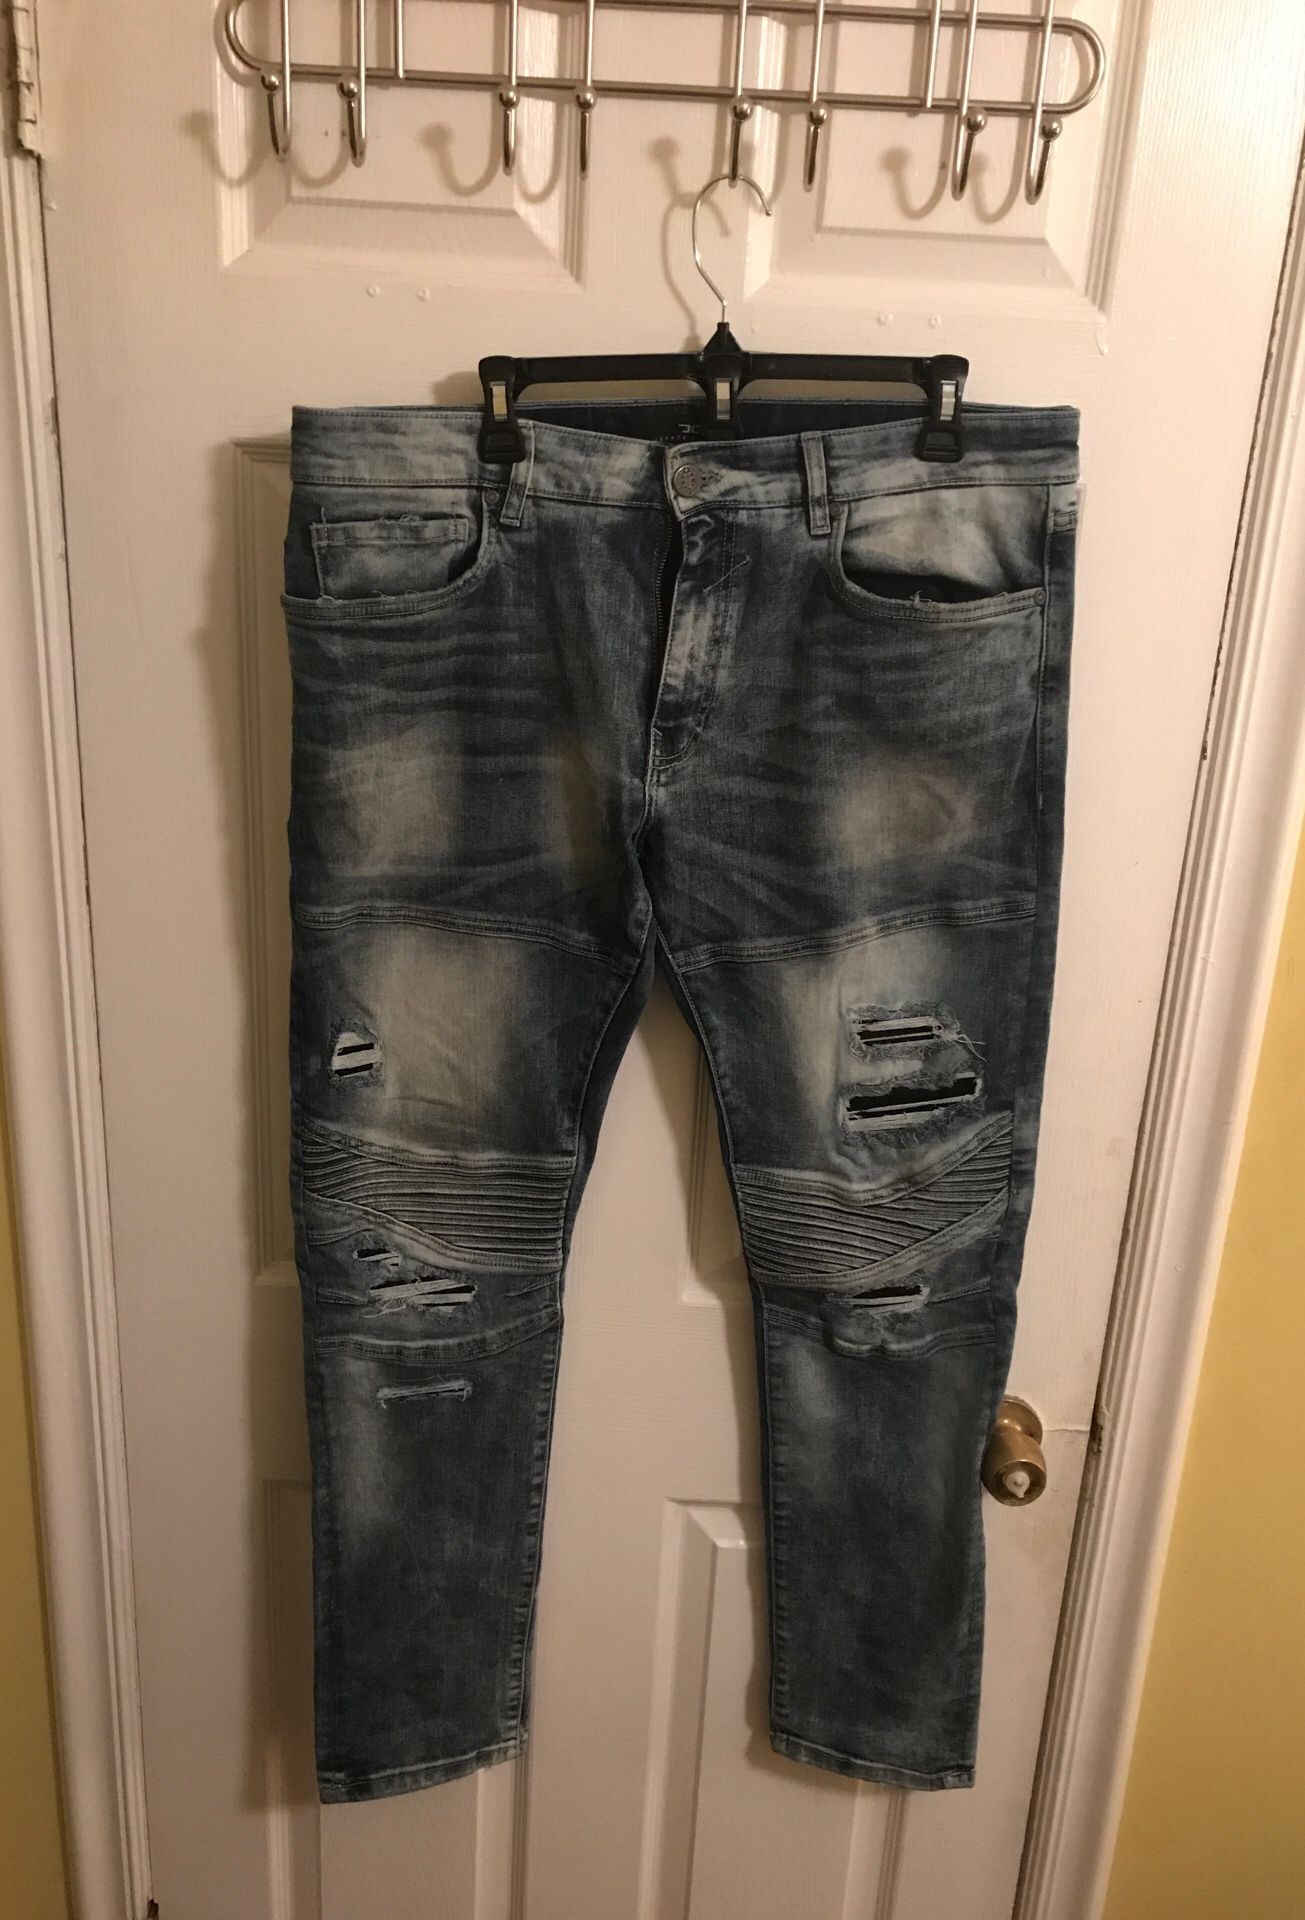 5 Pair Men’s Jeans (3 Jordan Craig, 2 Aeropostale)